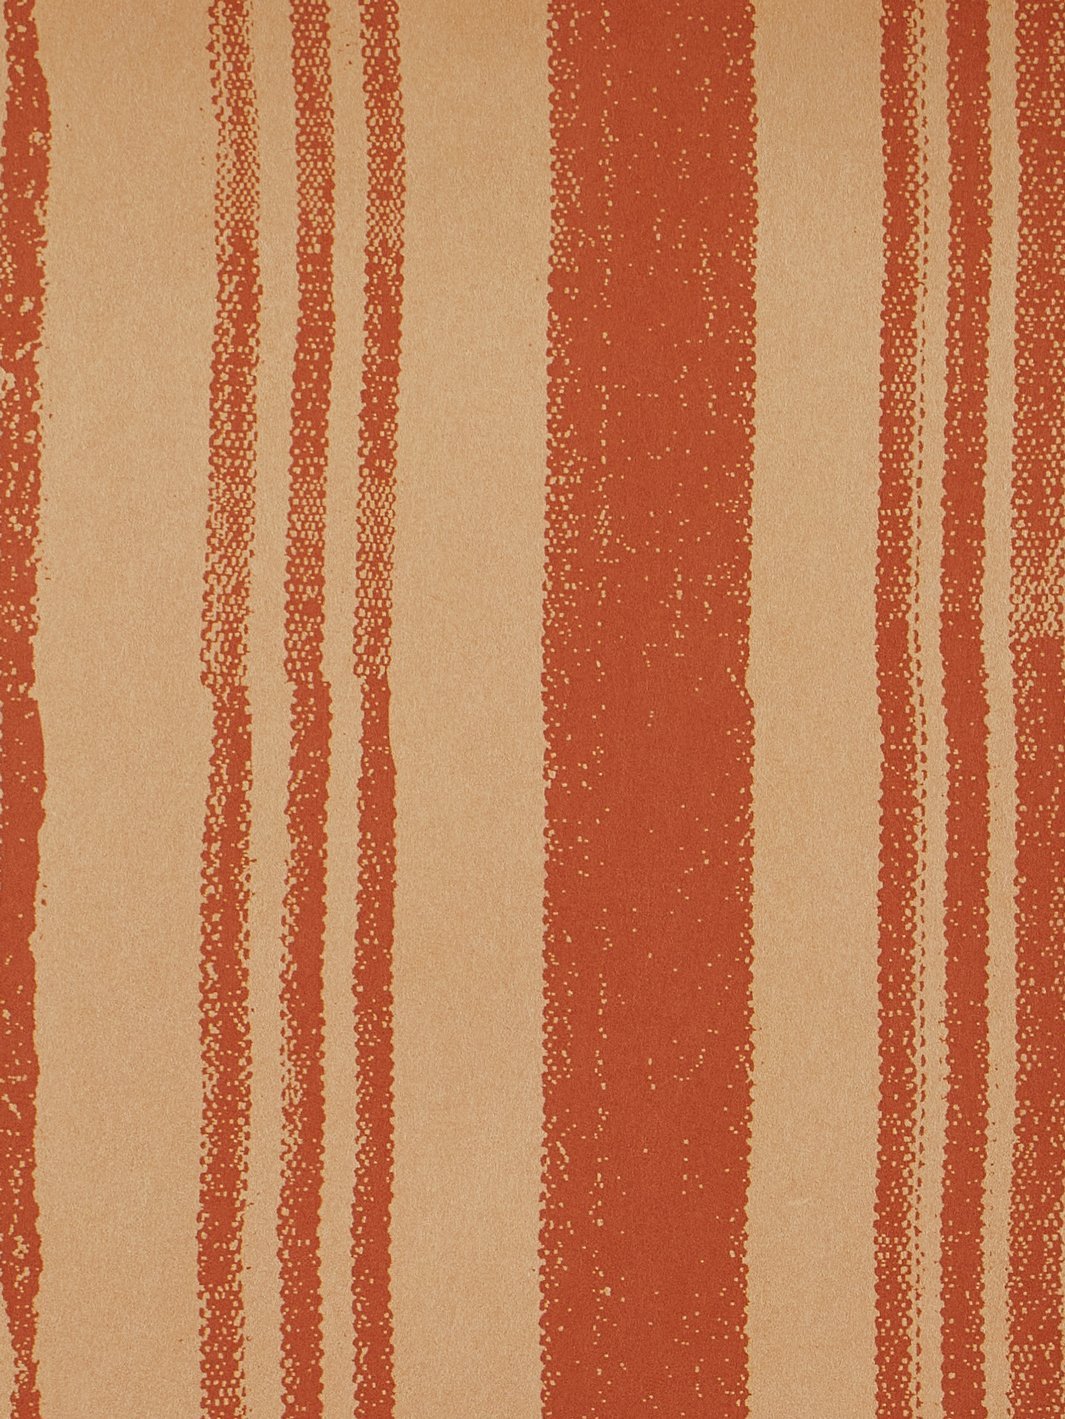 'Painted Stripes' Kraft' Wallpaper by Nathan Turner - Terracotta